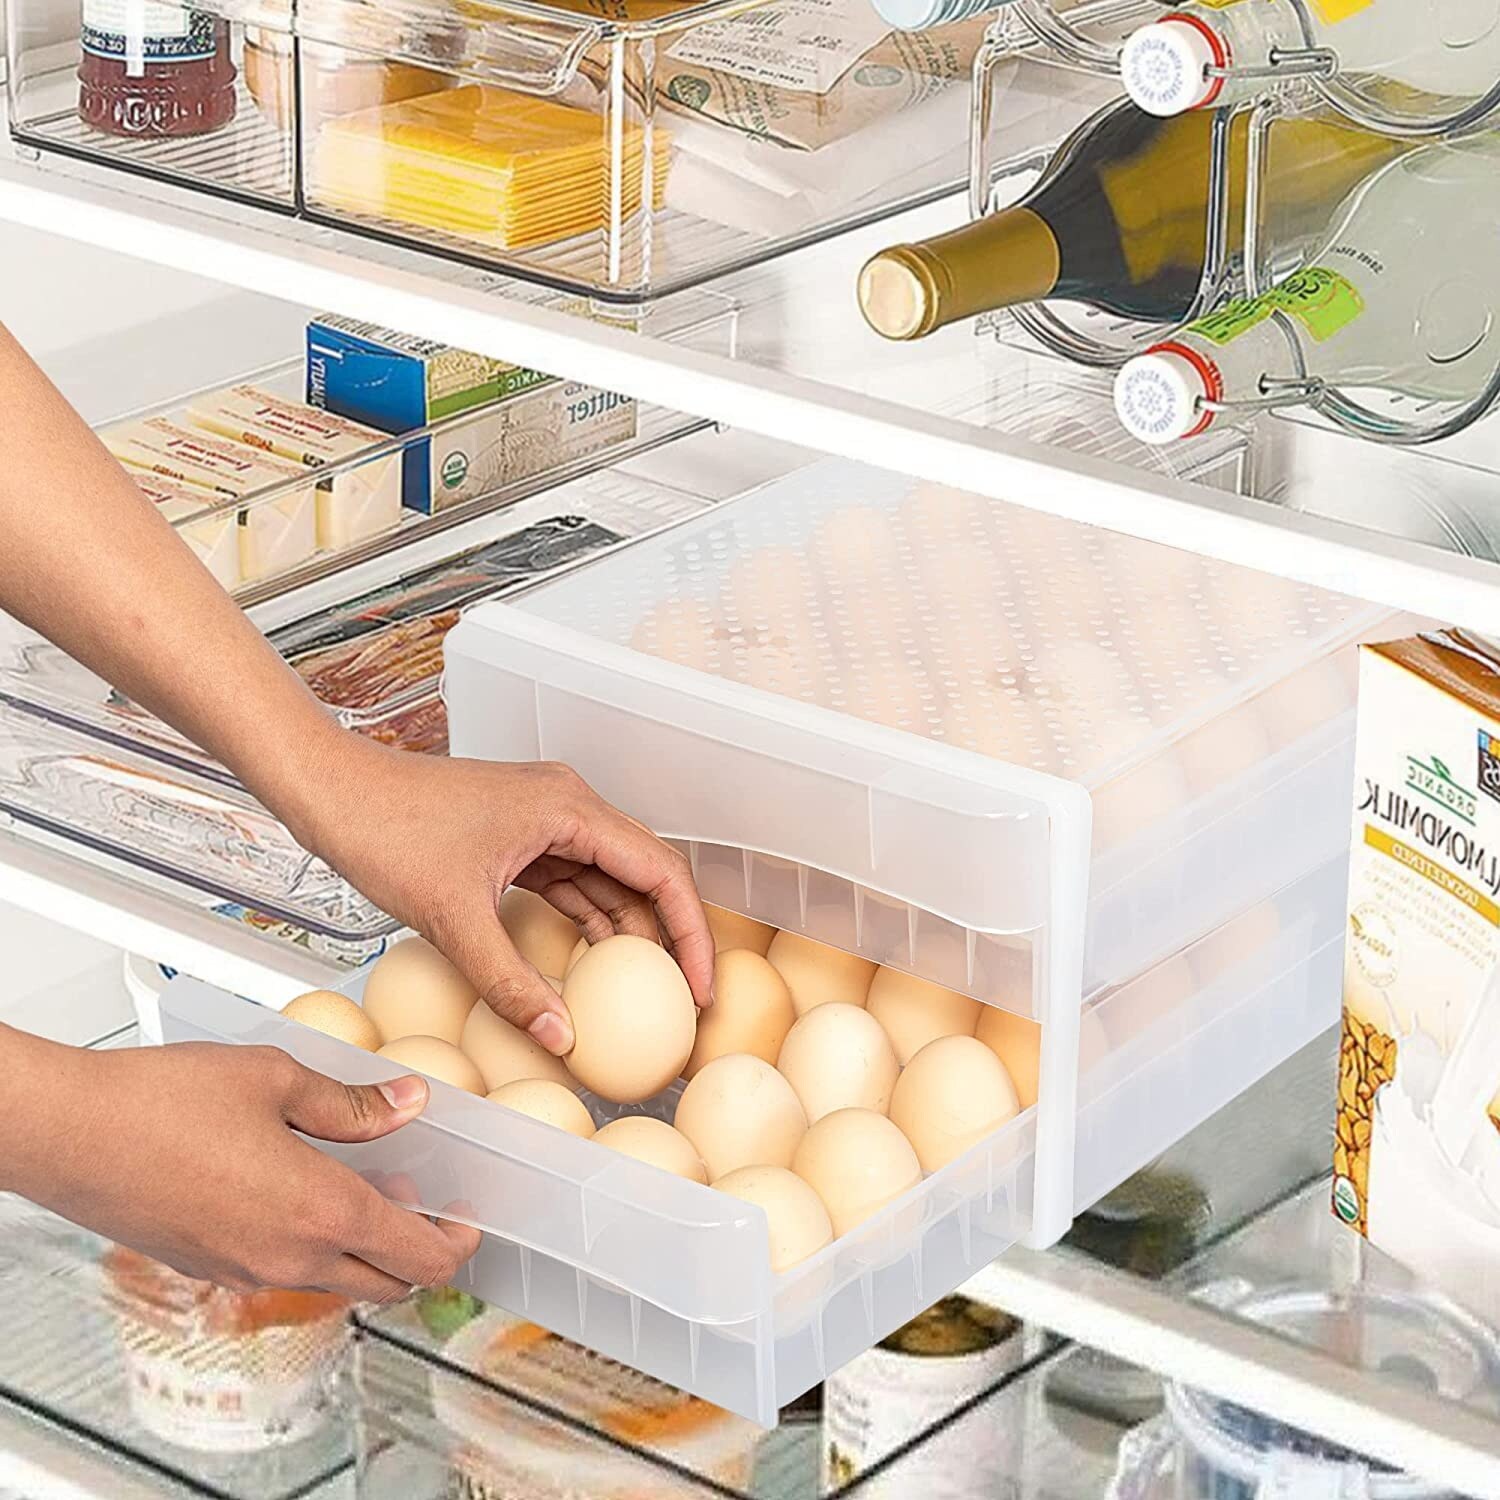 Kitchen Plastic Egg Holder,Fridge 2-tier Organizer Container with Handles -  On Sale - Bed Bath & Beyond - 36967320